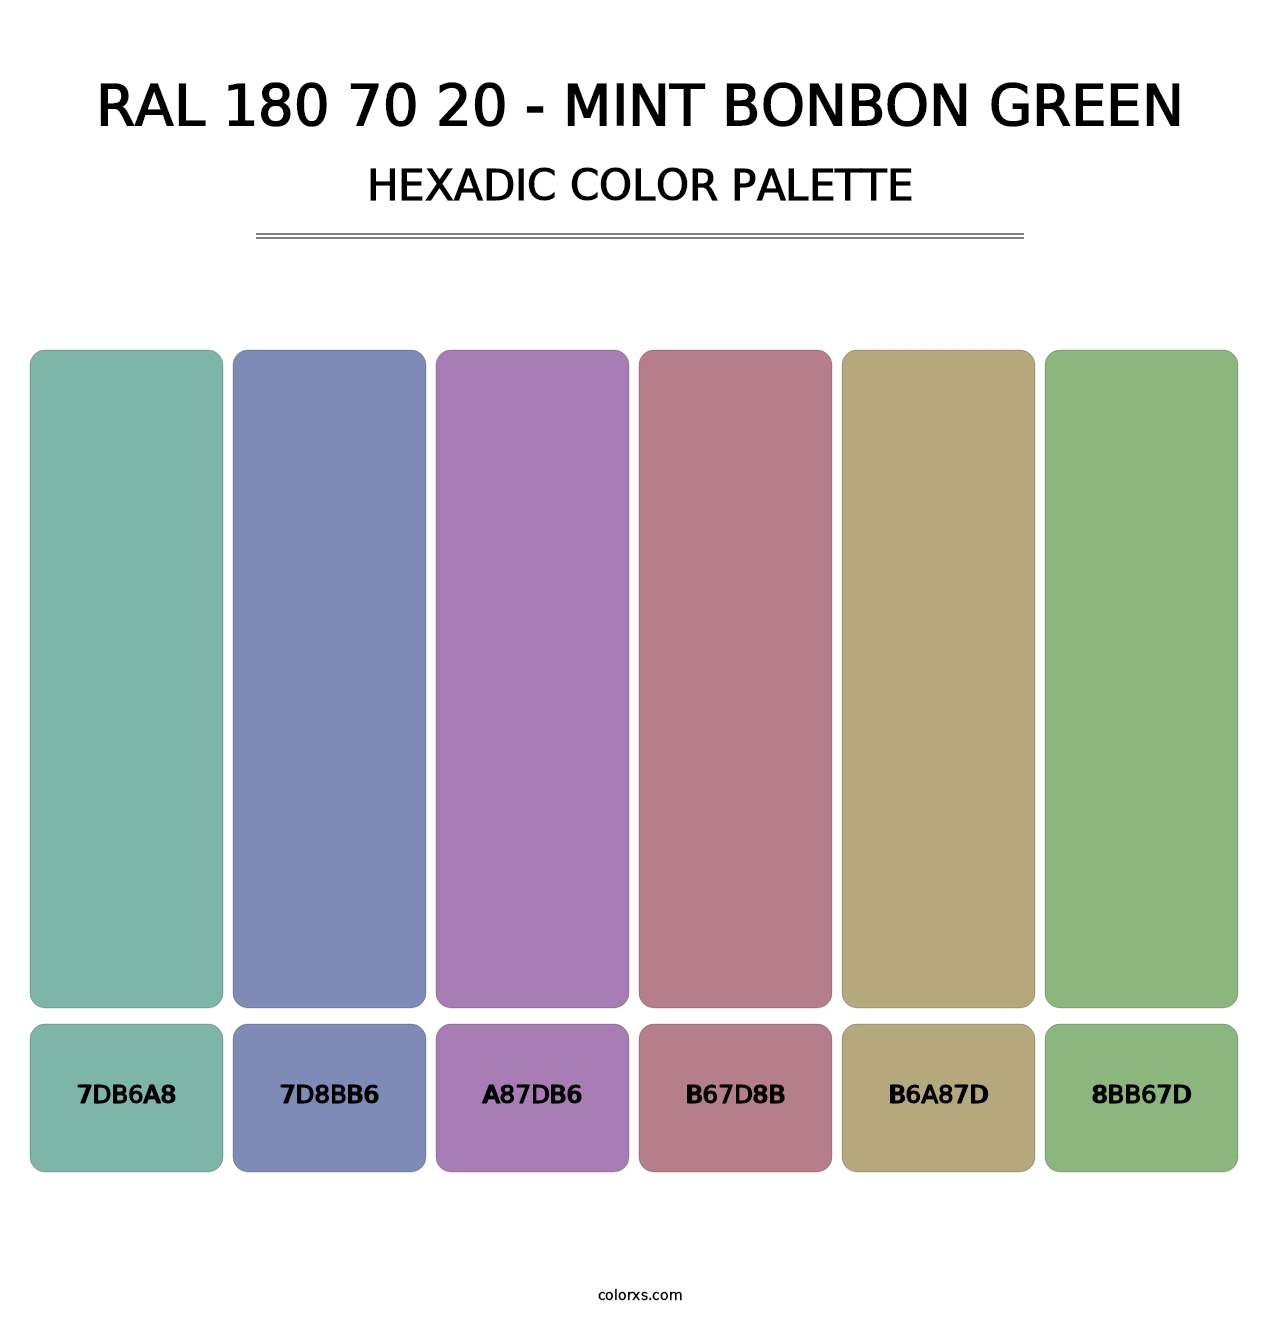 RAL 180 70 20 - Mint Bonbon Green - Hexadic Color Palette